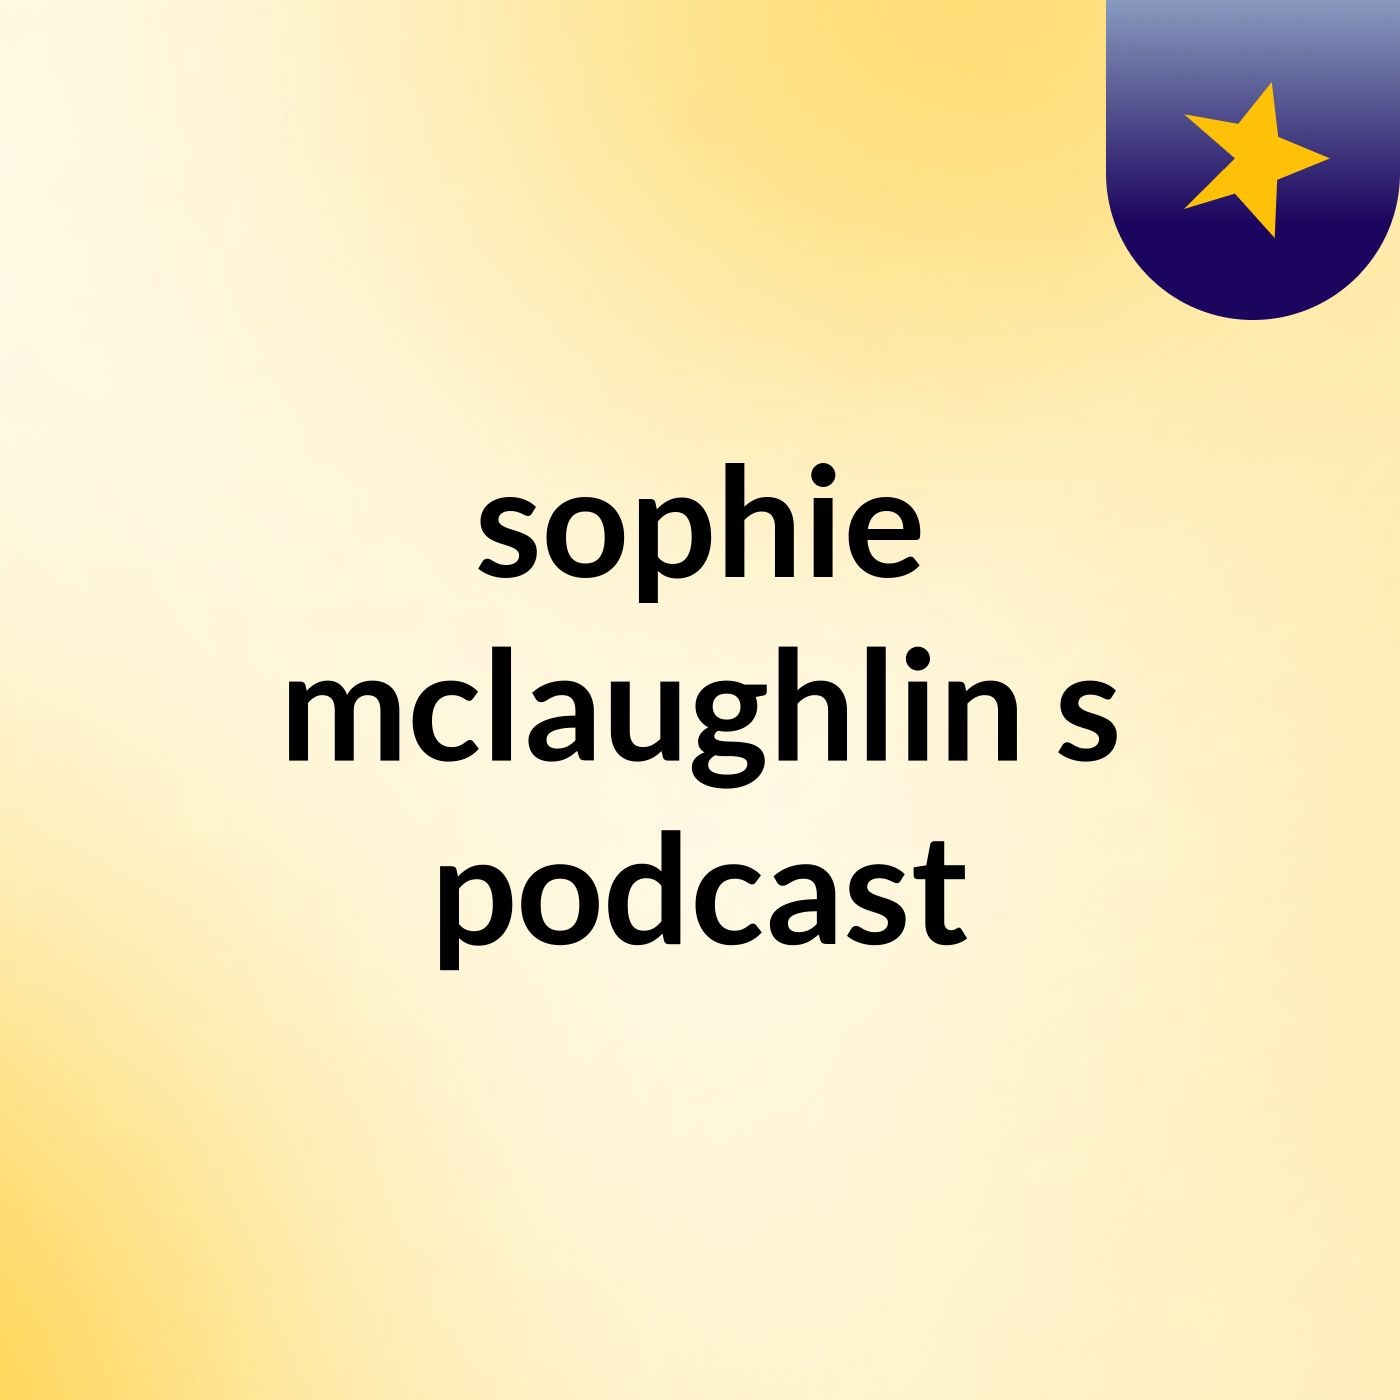 sophie mclaughlin's podcast